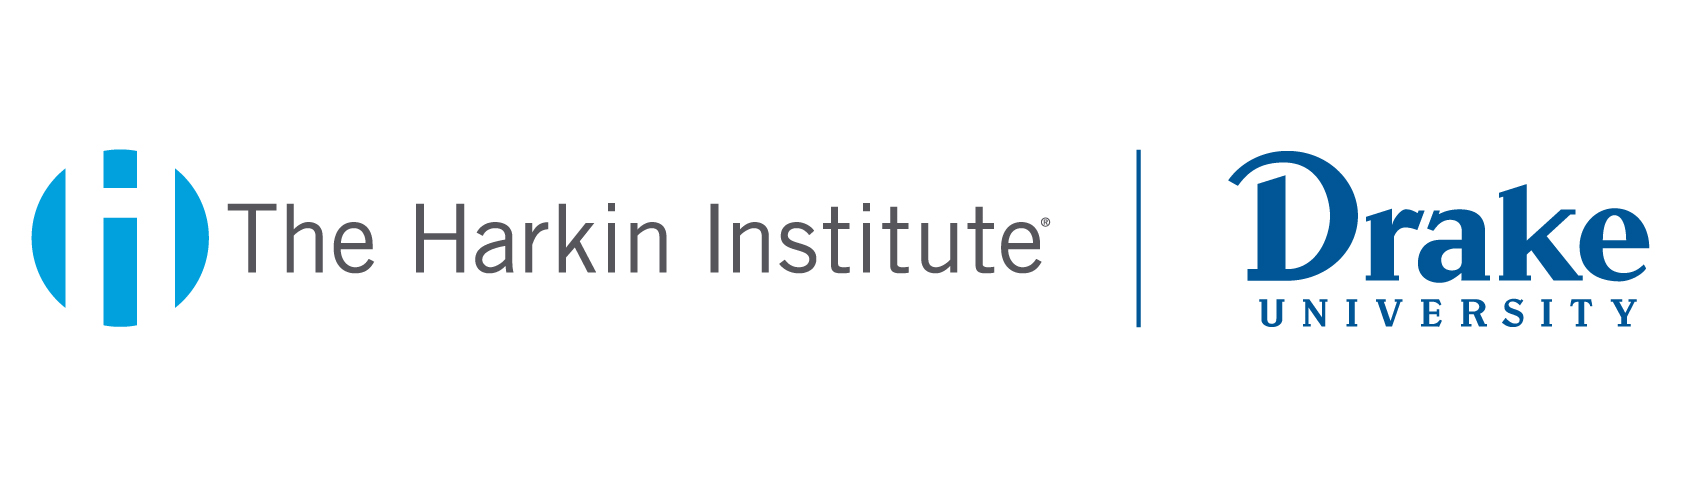 Harkin Institute and Drake University logos